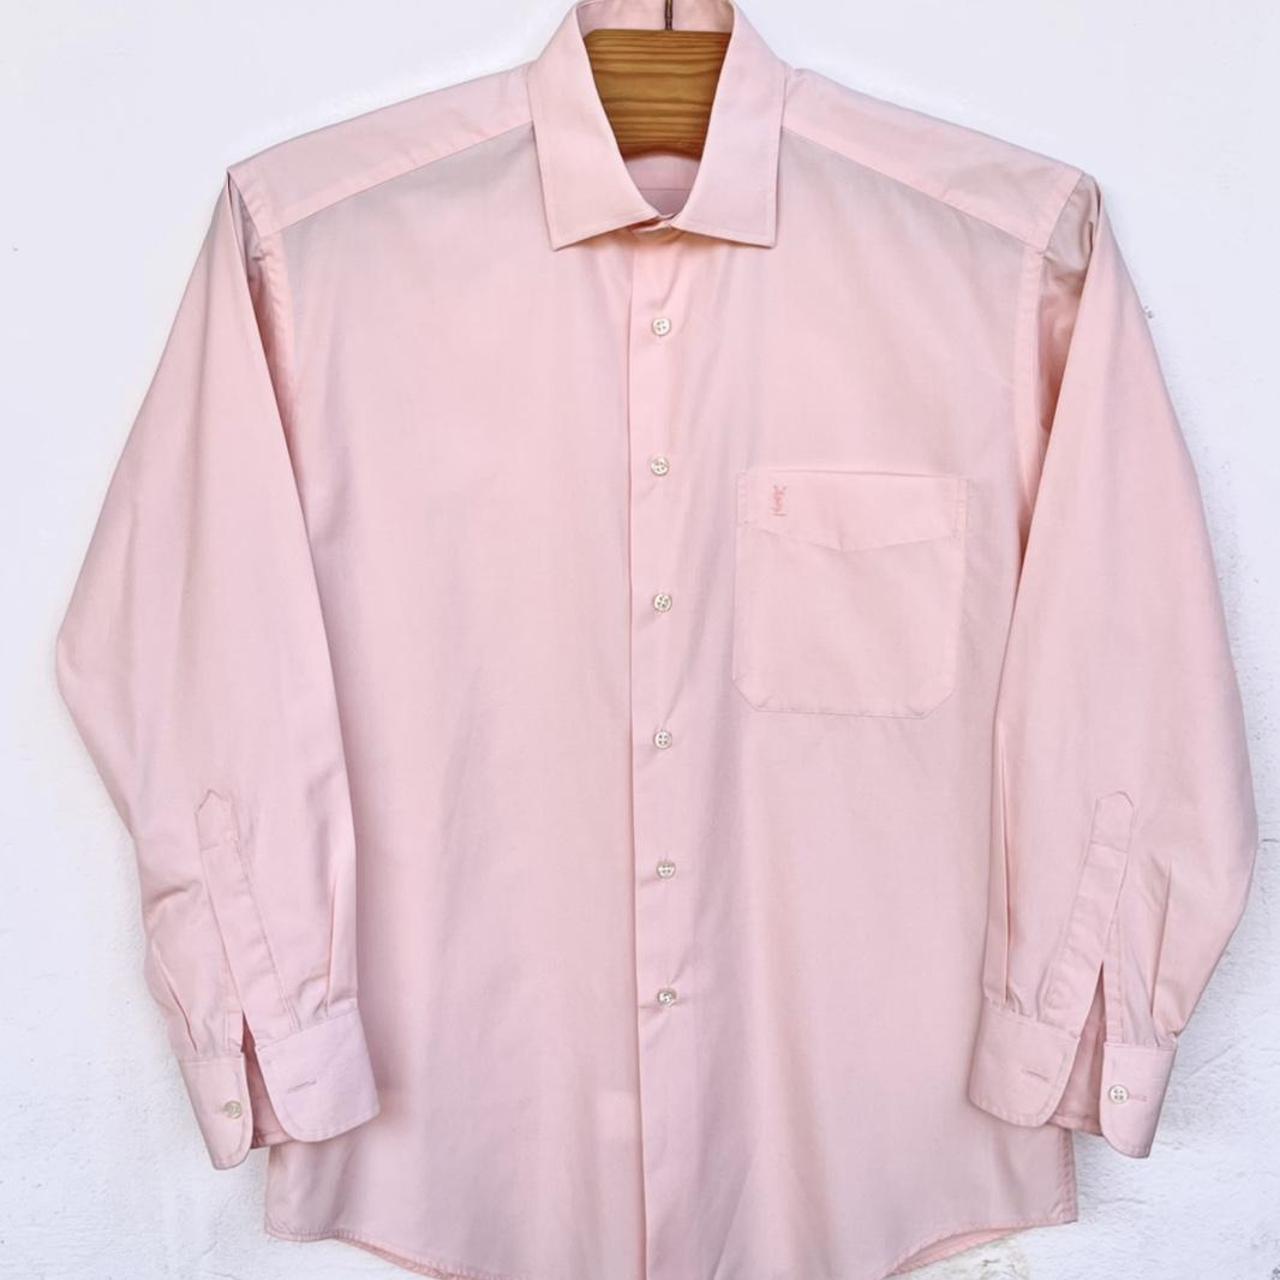 Yves Saint Laurent Men's Pink Shirt | Depop